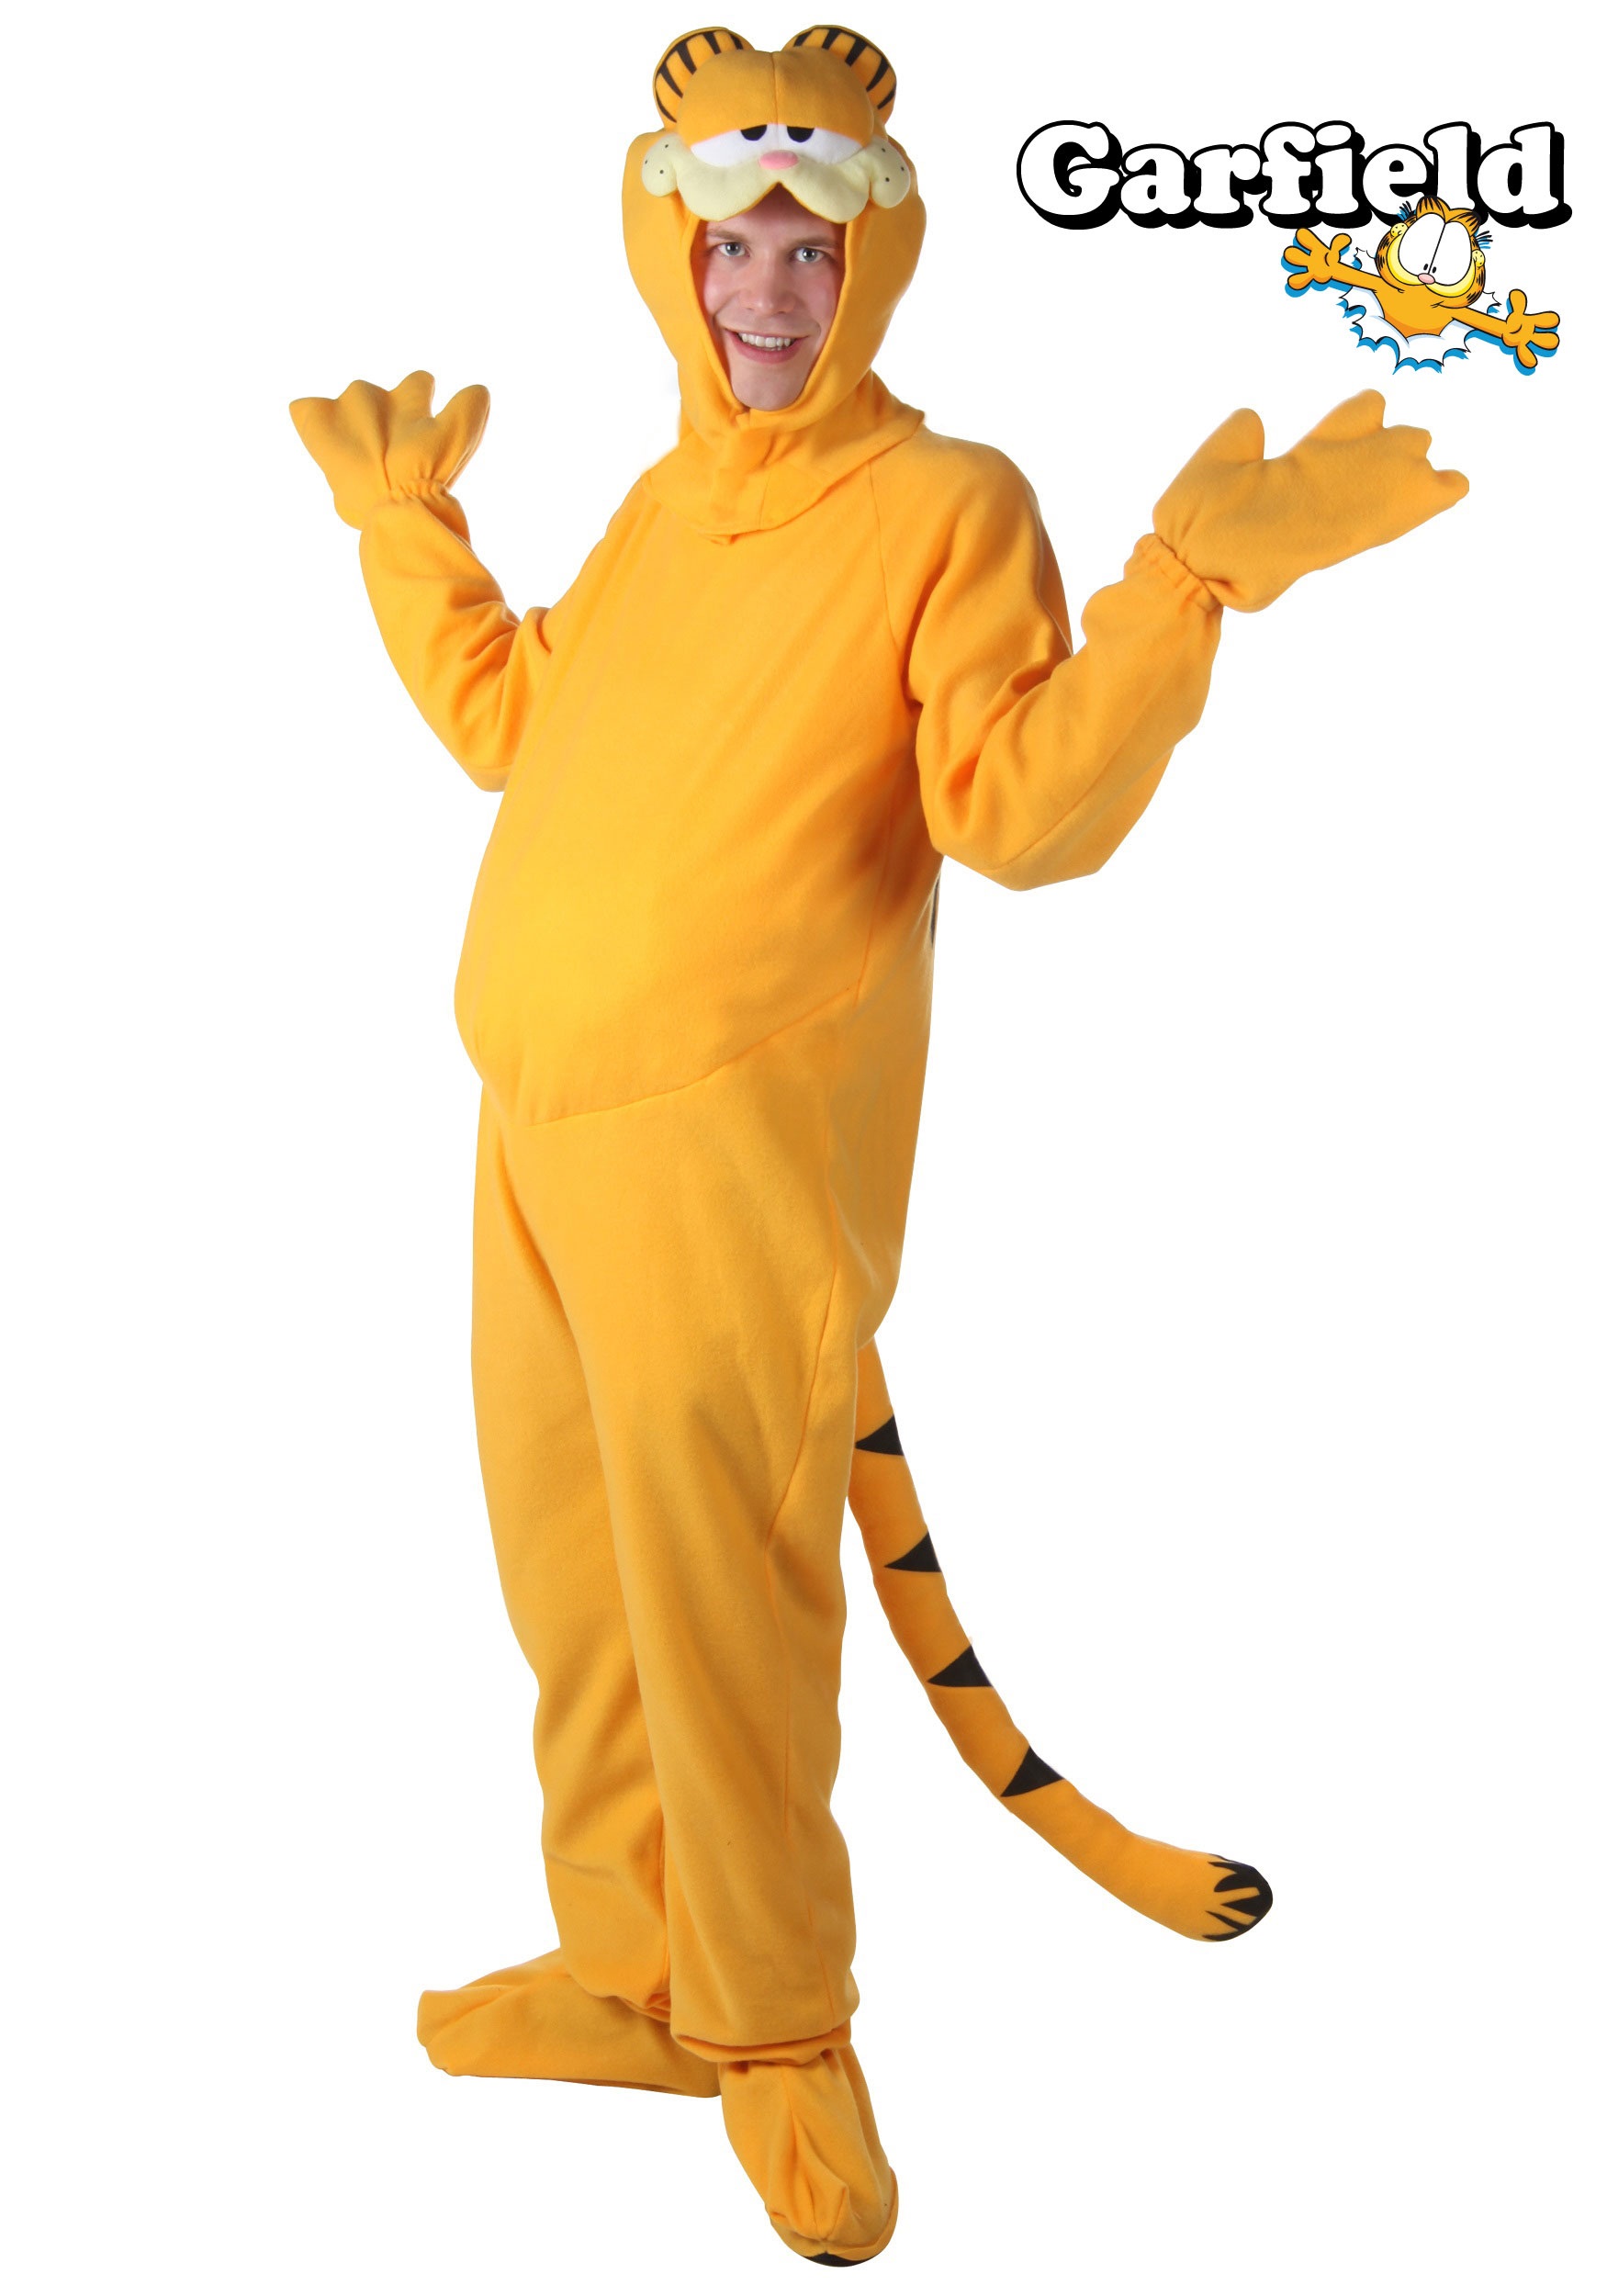 Perpetrator shield Jacket Plus Size Garfield Costume - Halloween Costume Ideas 2022